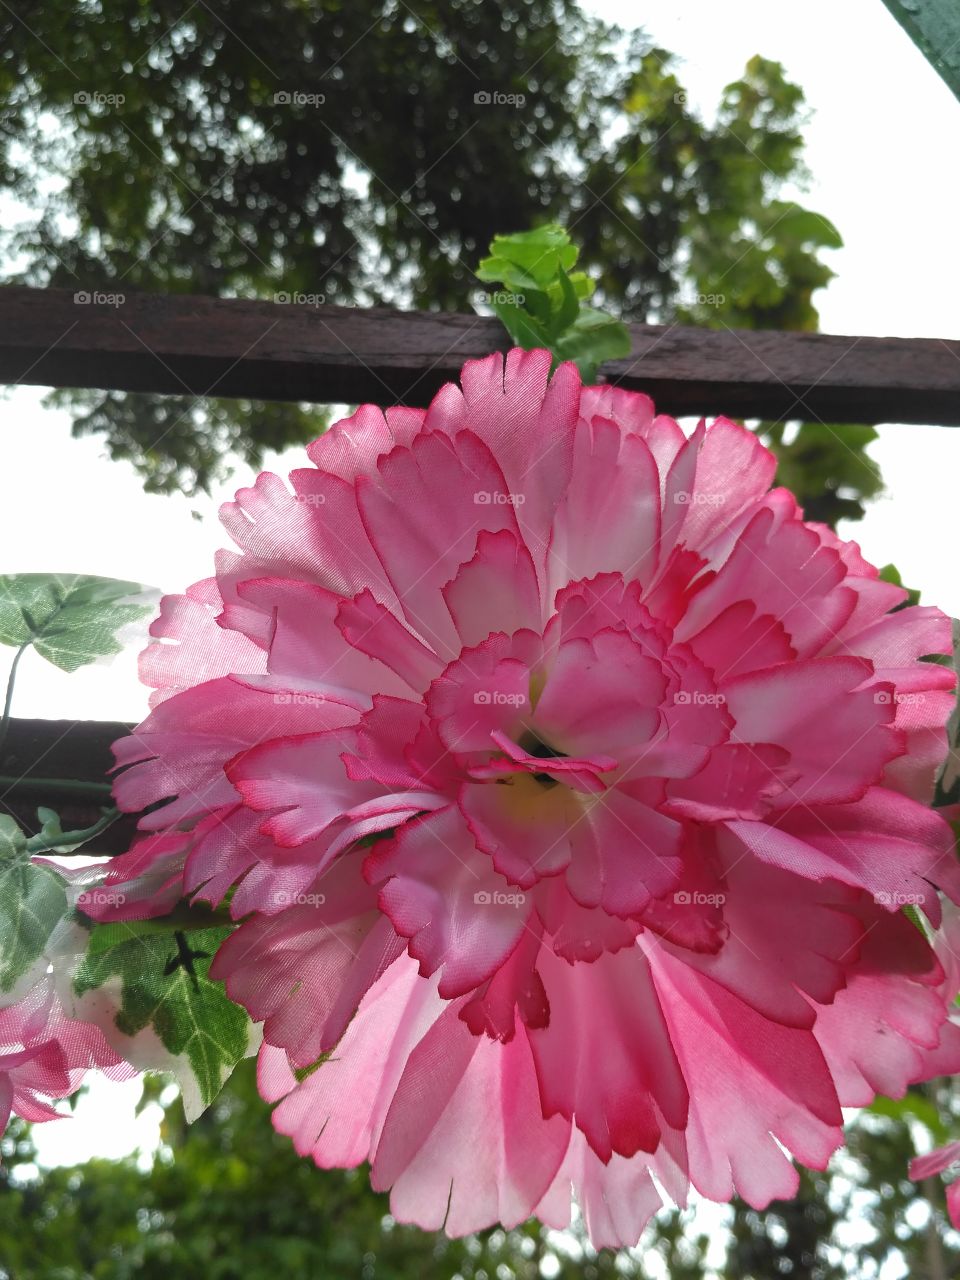 the beautiful flower